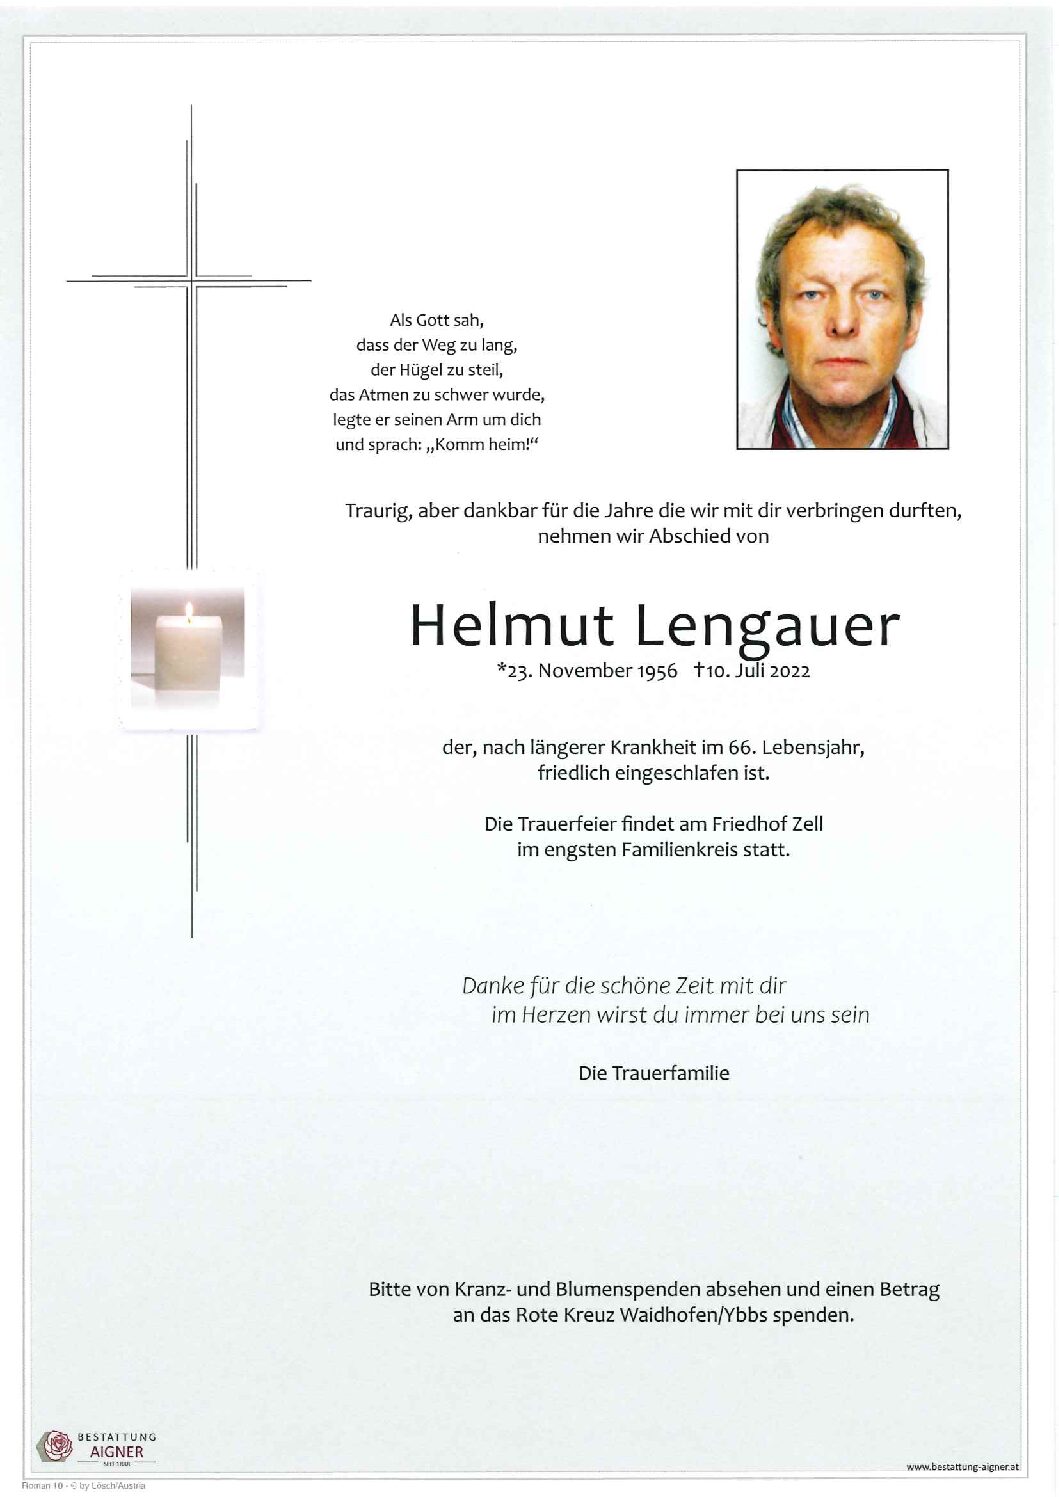 Helmut Lengauer